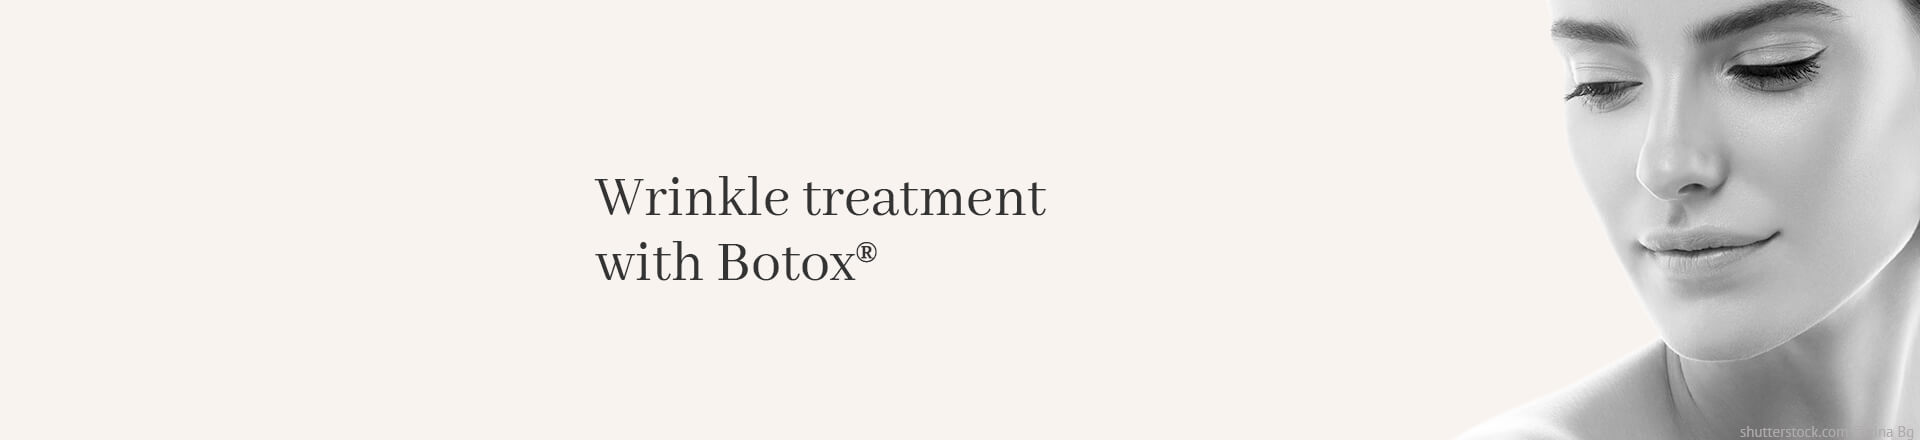 Wrinkle Treatment Botox, Difine, Dr. Narwan, Plastic Surgery, Essen 